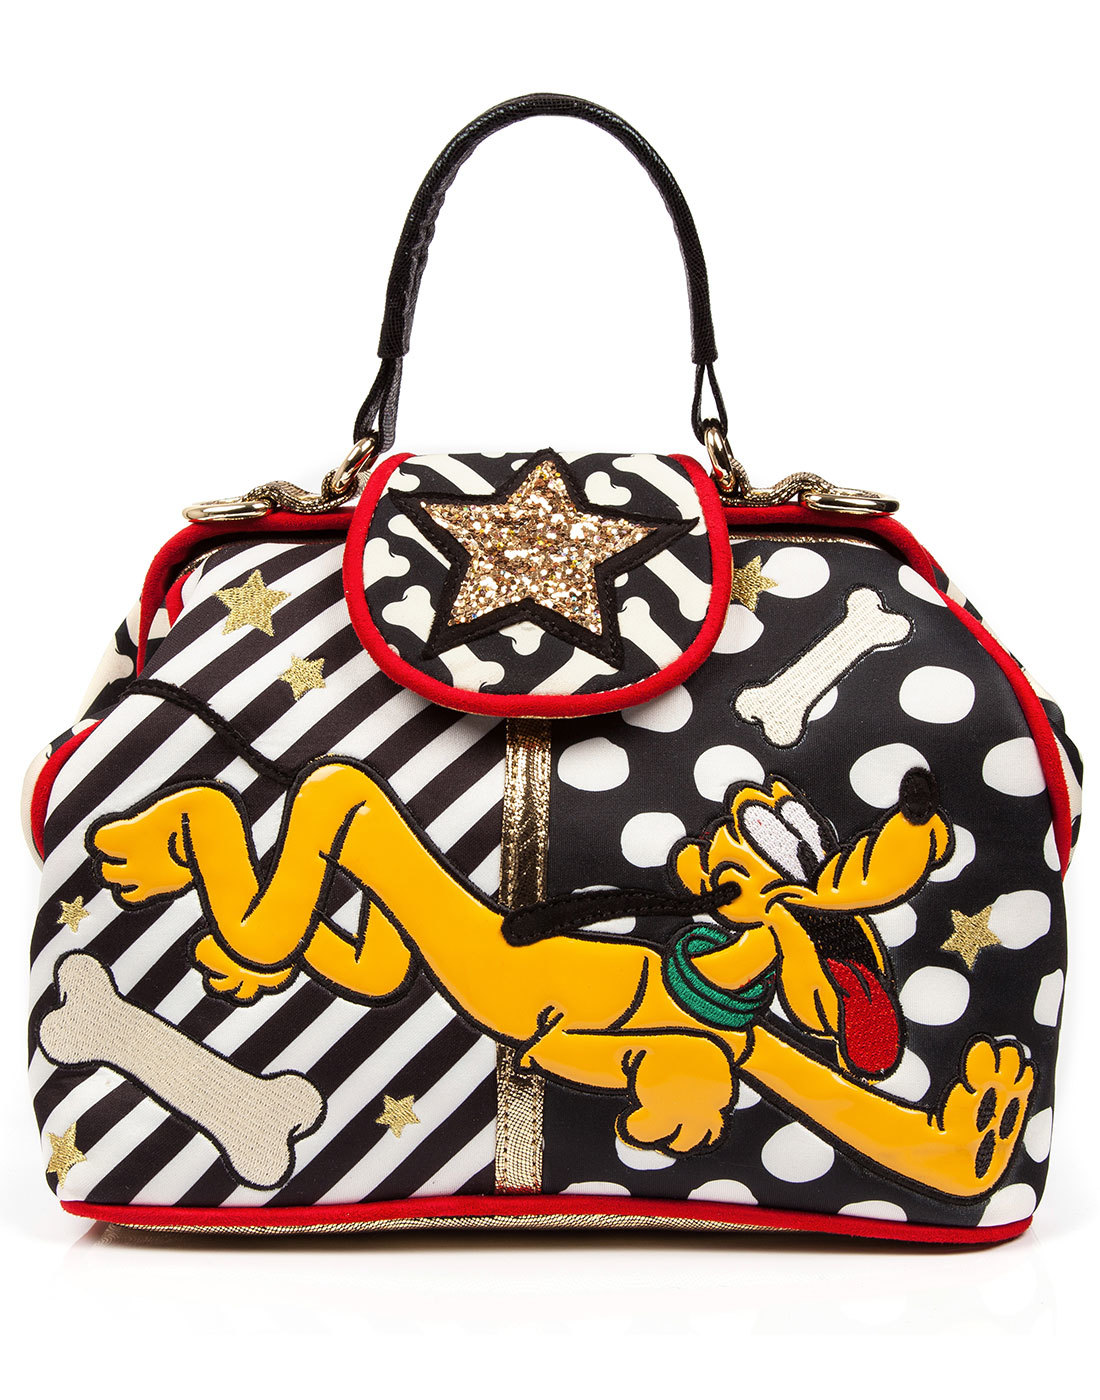 Pluto IRREGULAR CHOICE Limited Edition Handbag